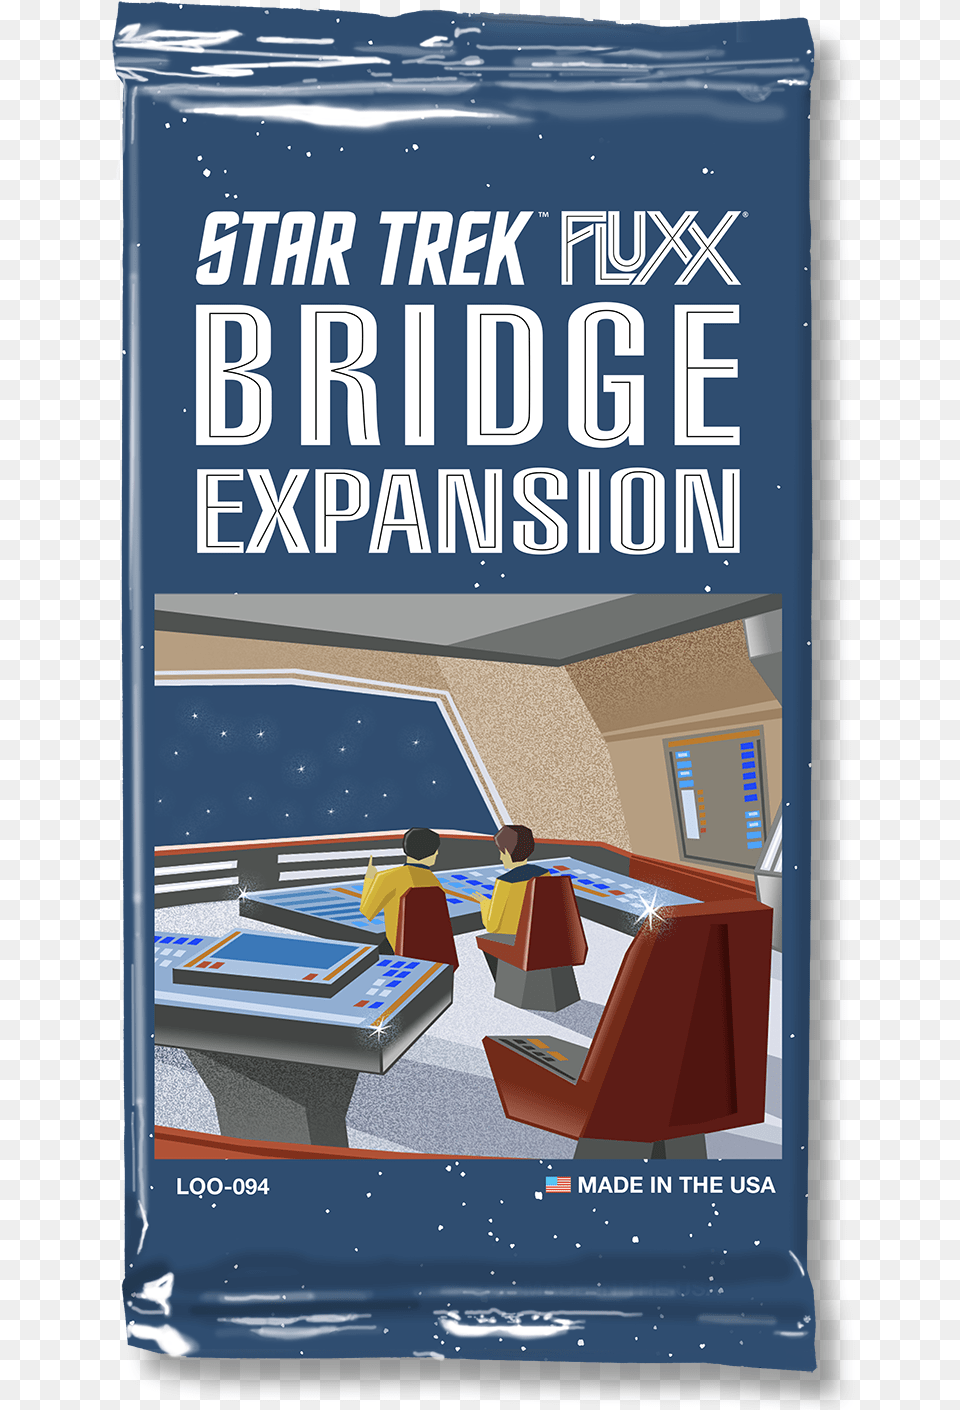 Star Trek Fluxx Bridge Expansion, Advertisement, Poster, Book, Publication Free Png Download